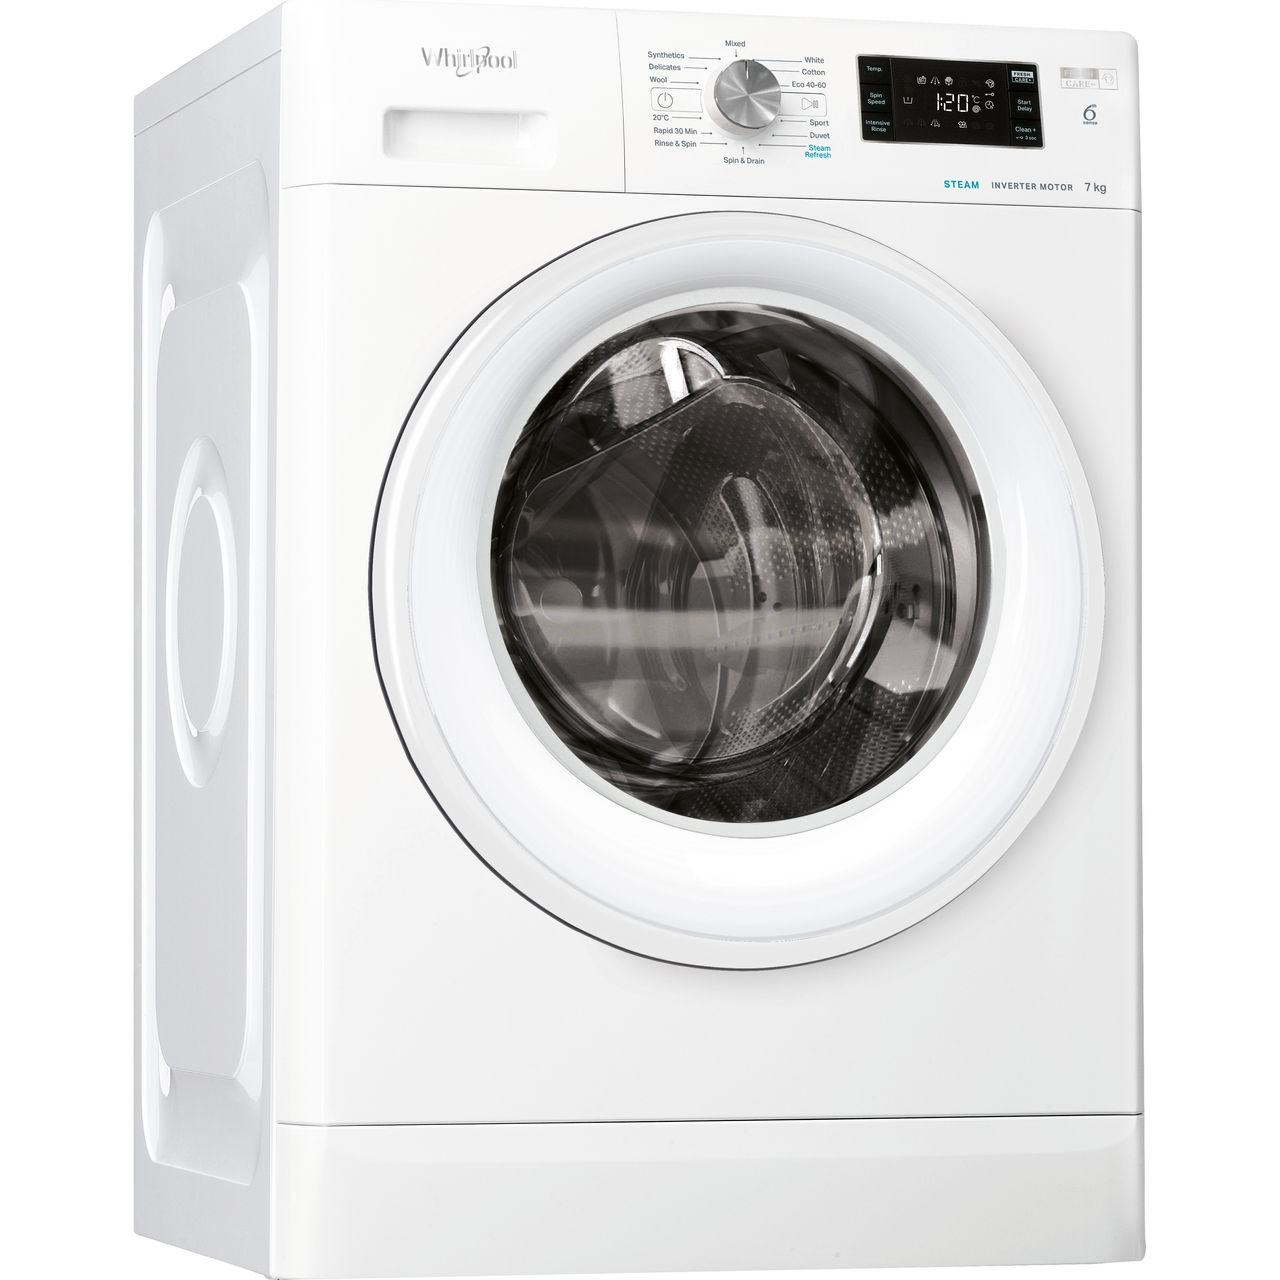 Whirlpool FFB7438WVUK 7Kg Washing Machine with 1400 rpm Review